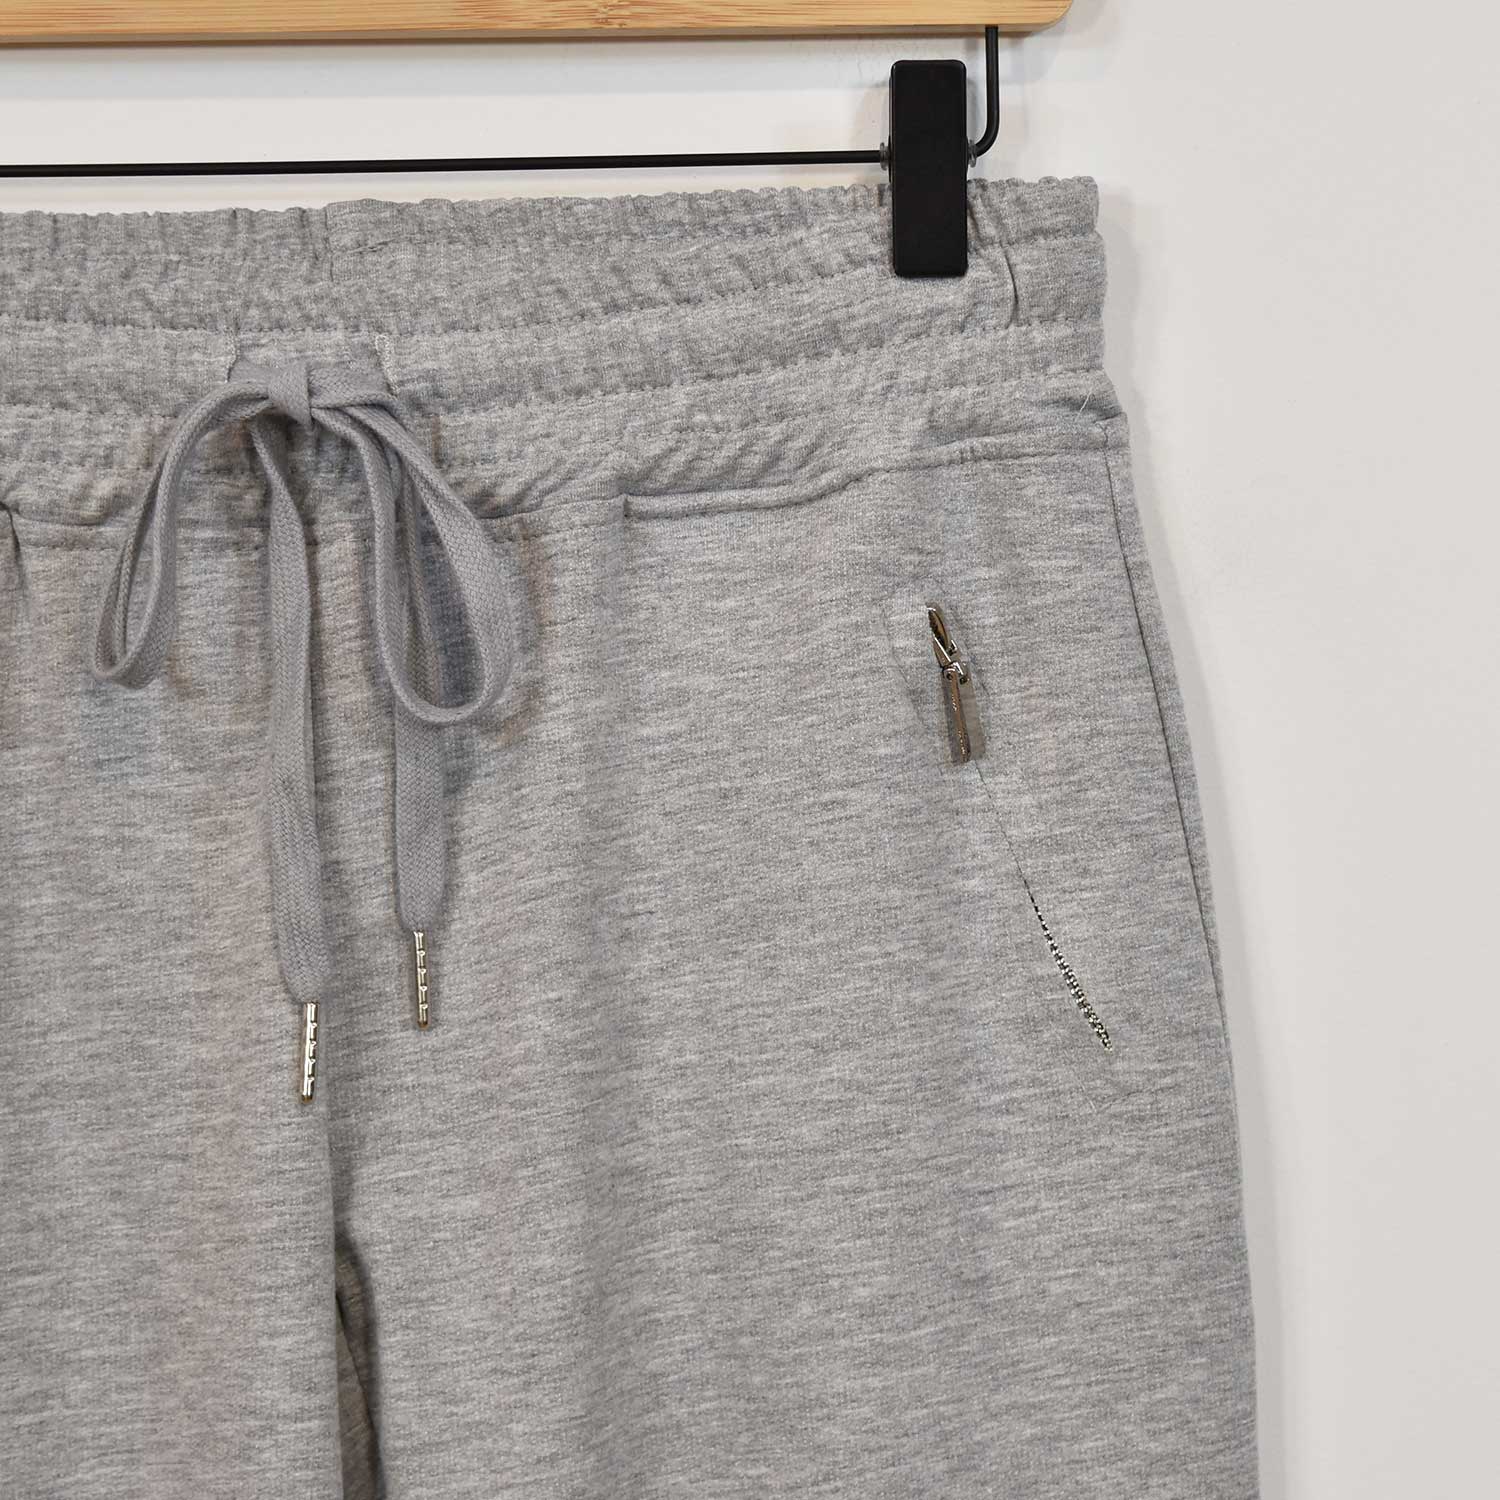 Pantalon jogger gris zippé